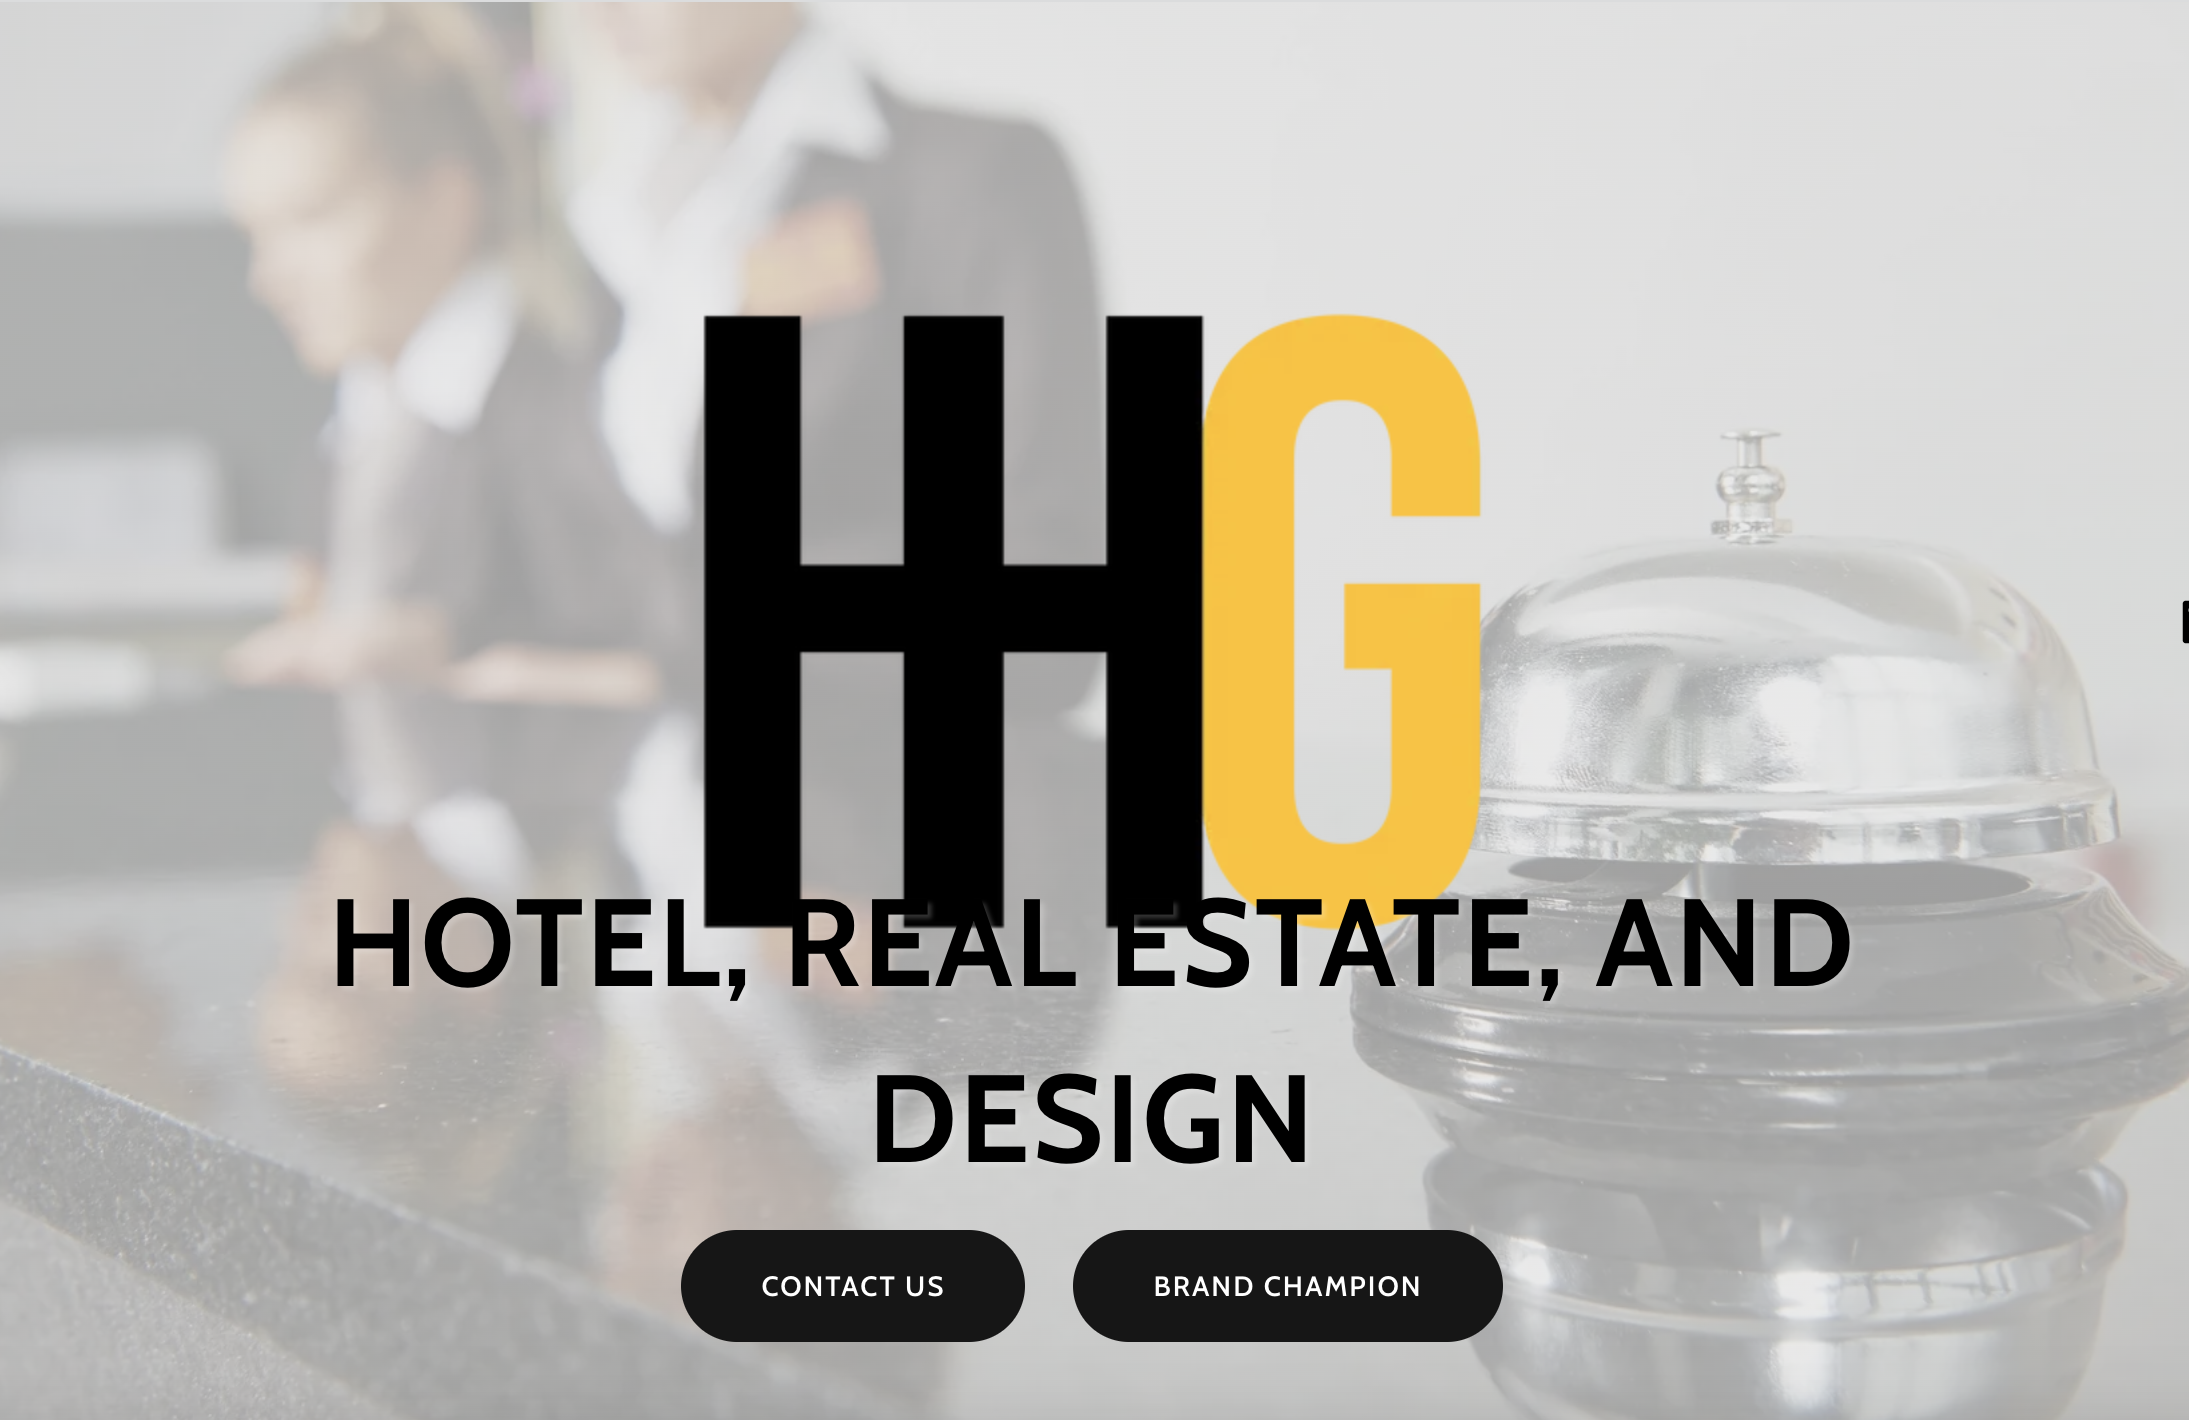 Hugh Hotel Group